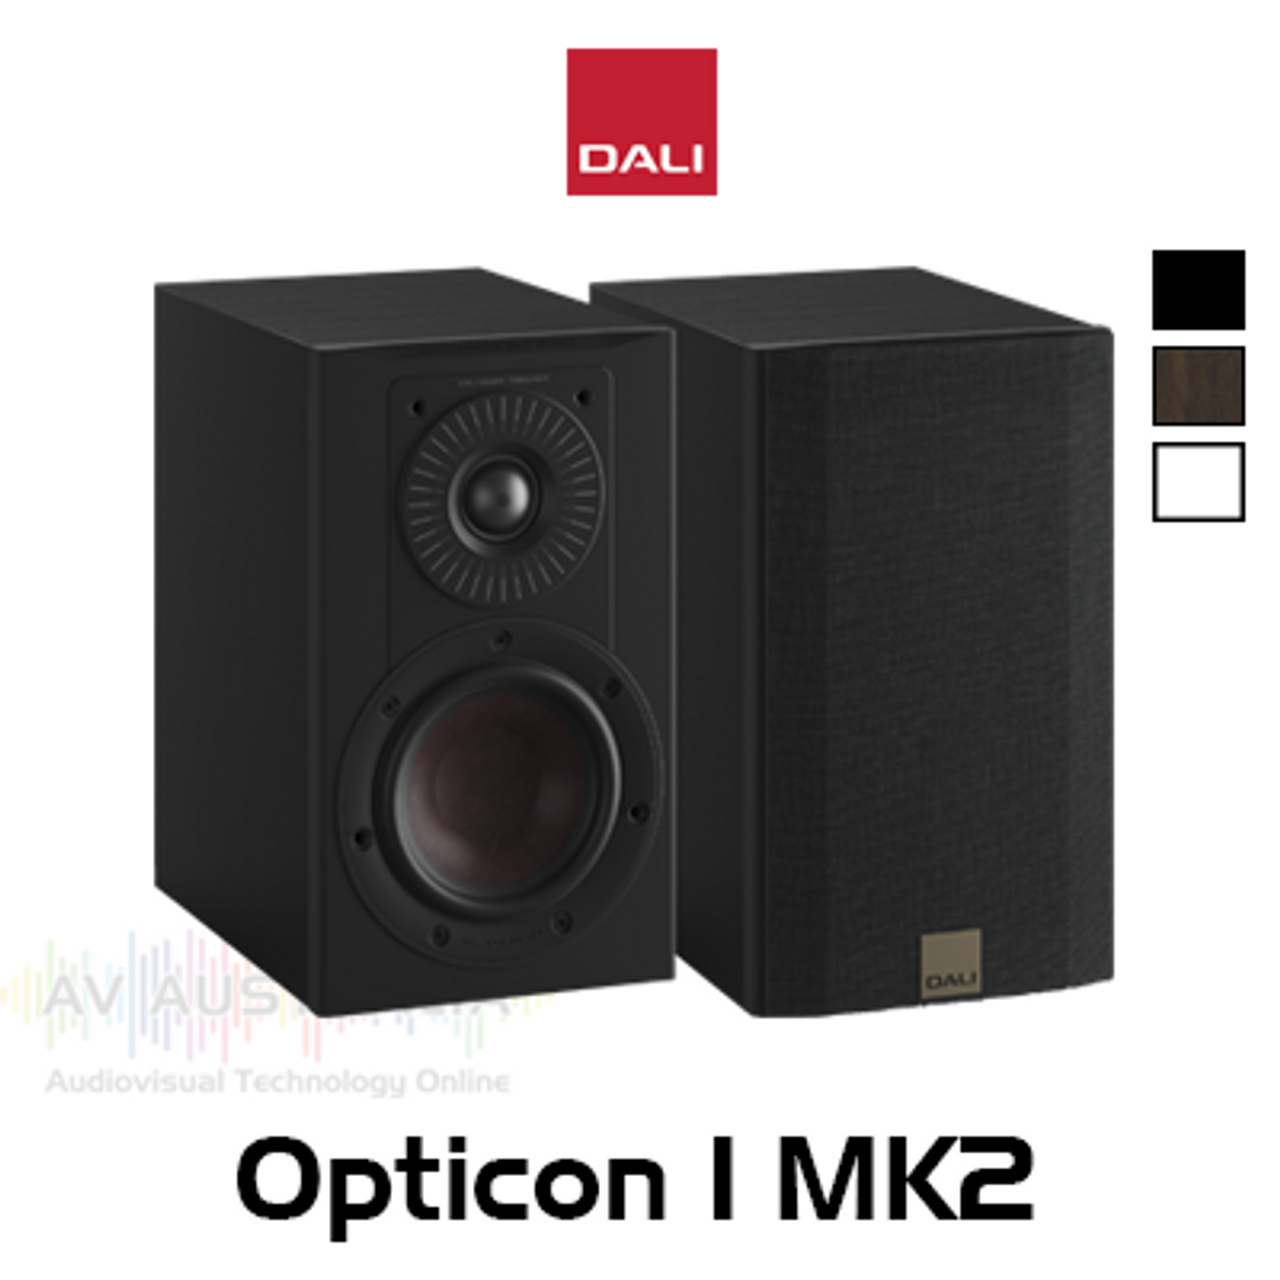 Dali Opticon 1 MK2 4.75 Bookshelf Speakers